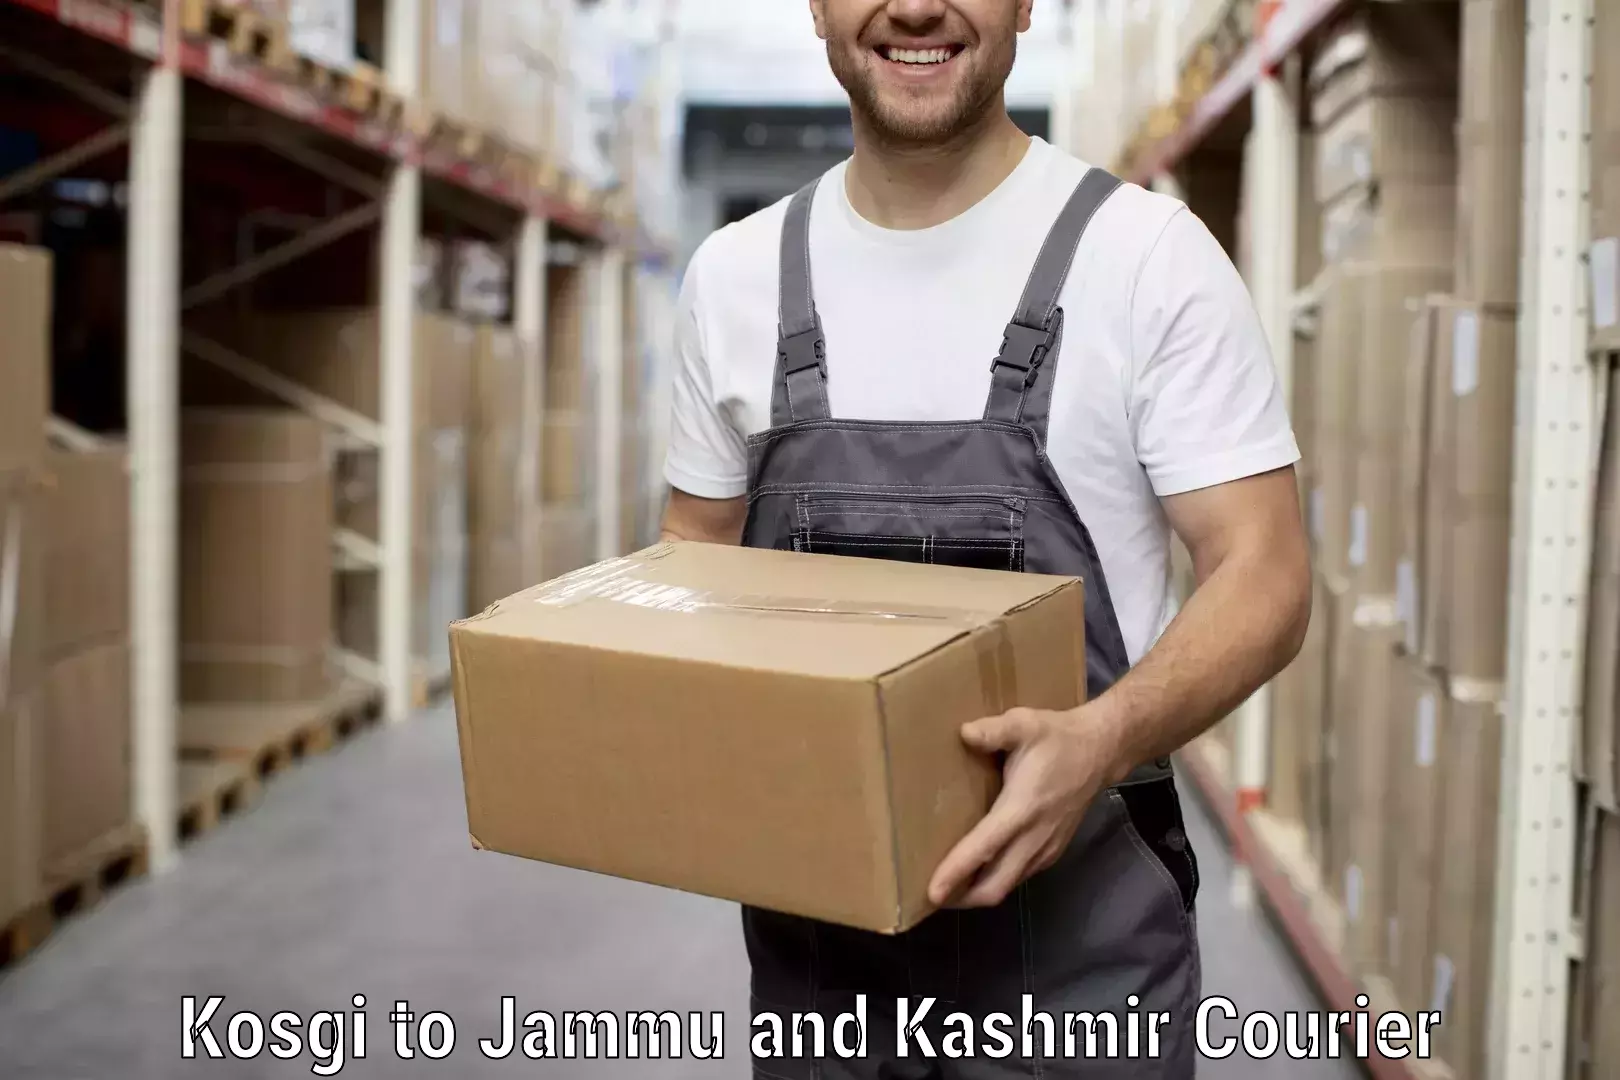 Home goods moving company Kosgi to Jakh